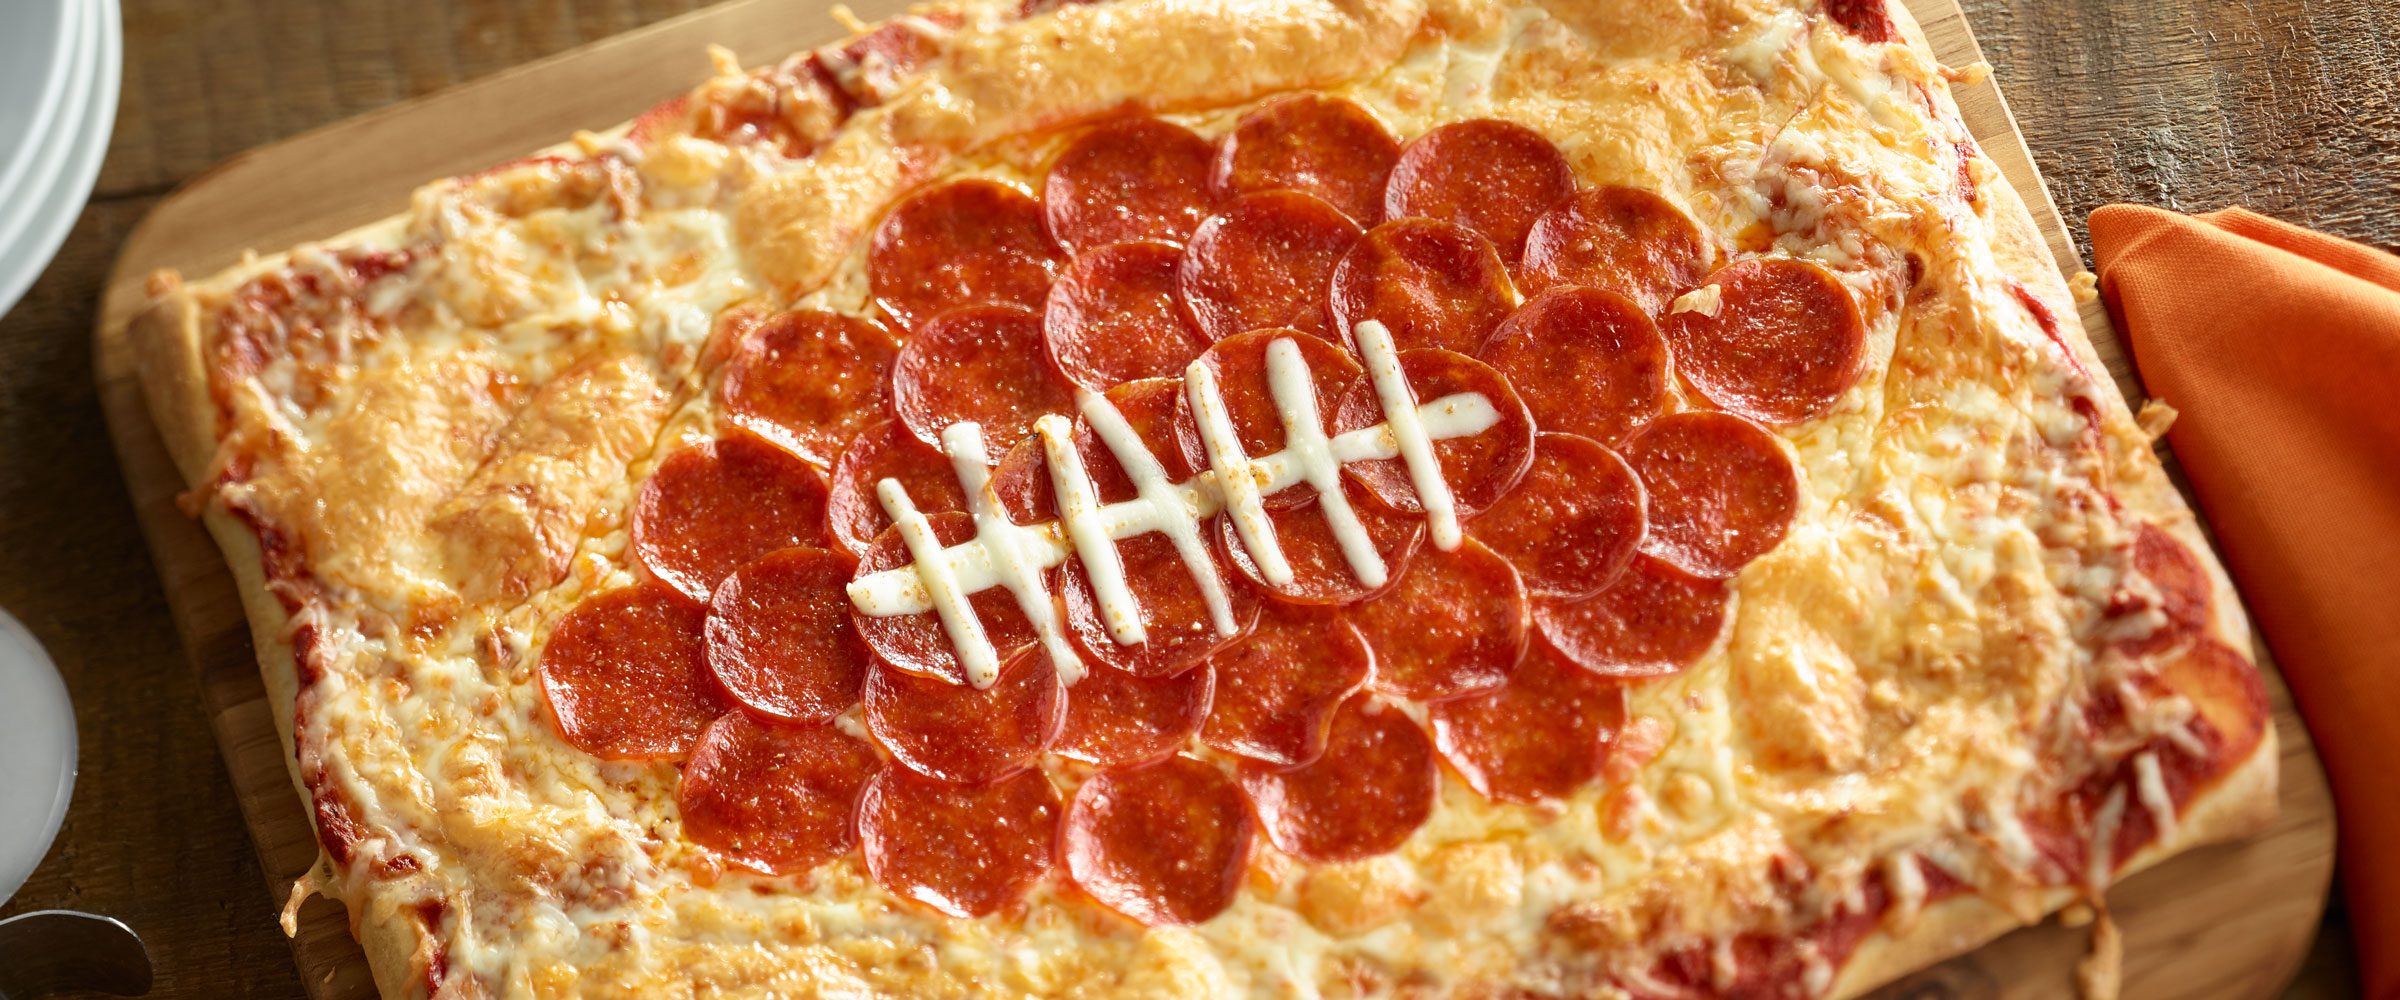 Football shaped Pepperoni Pizza on cutting board